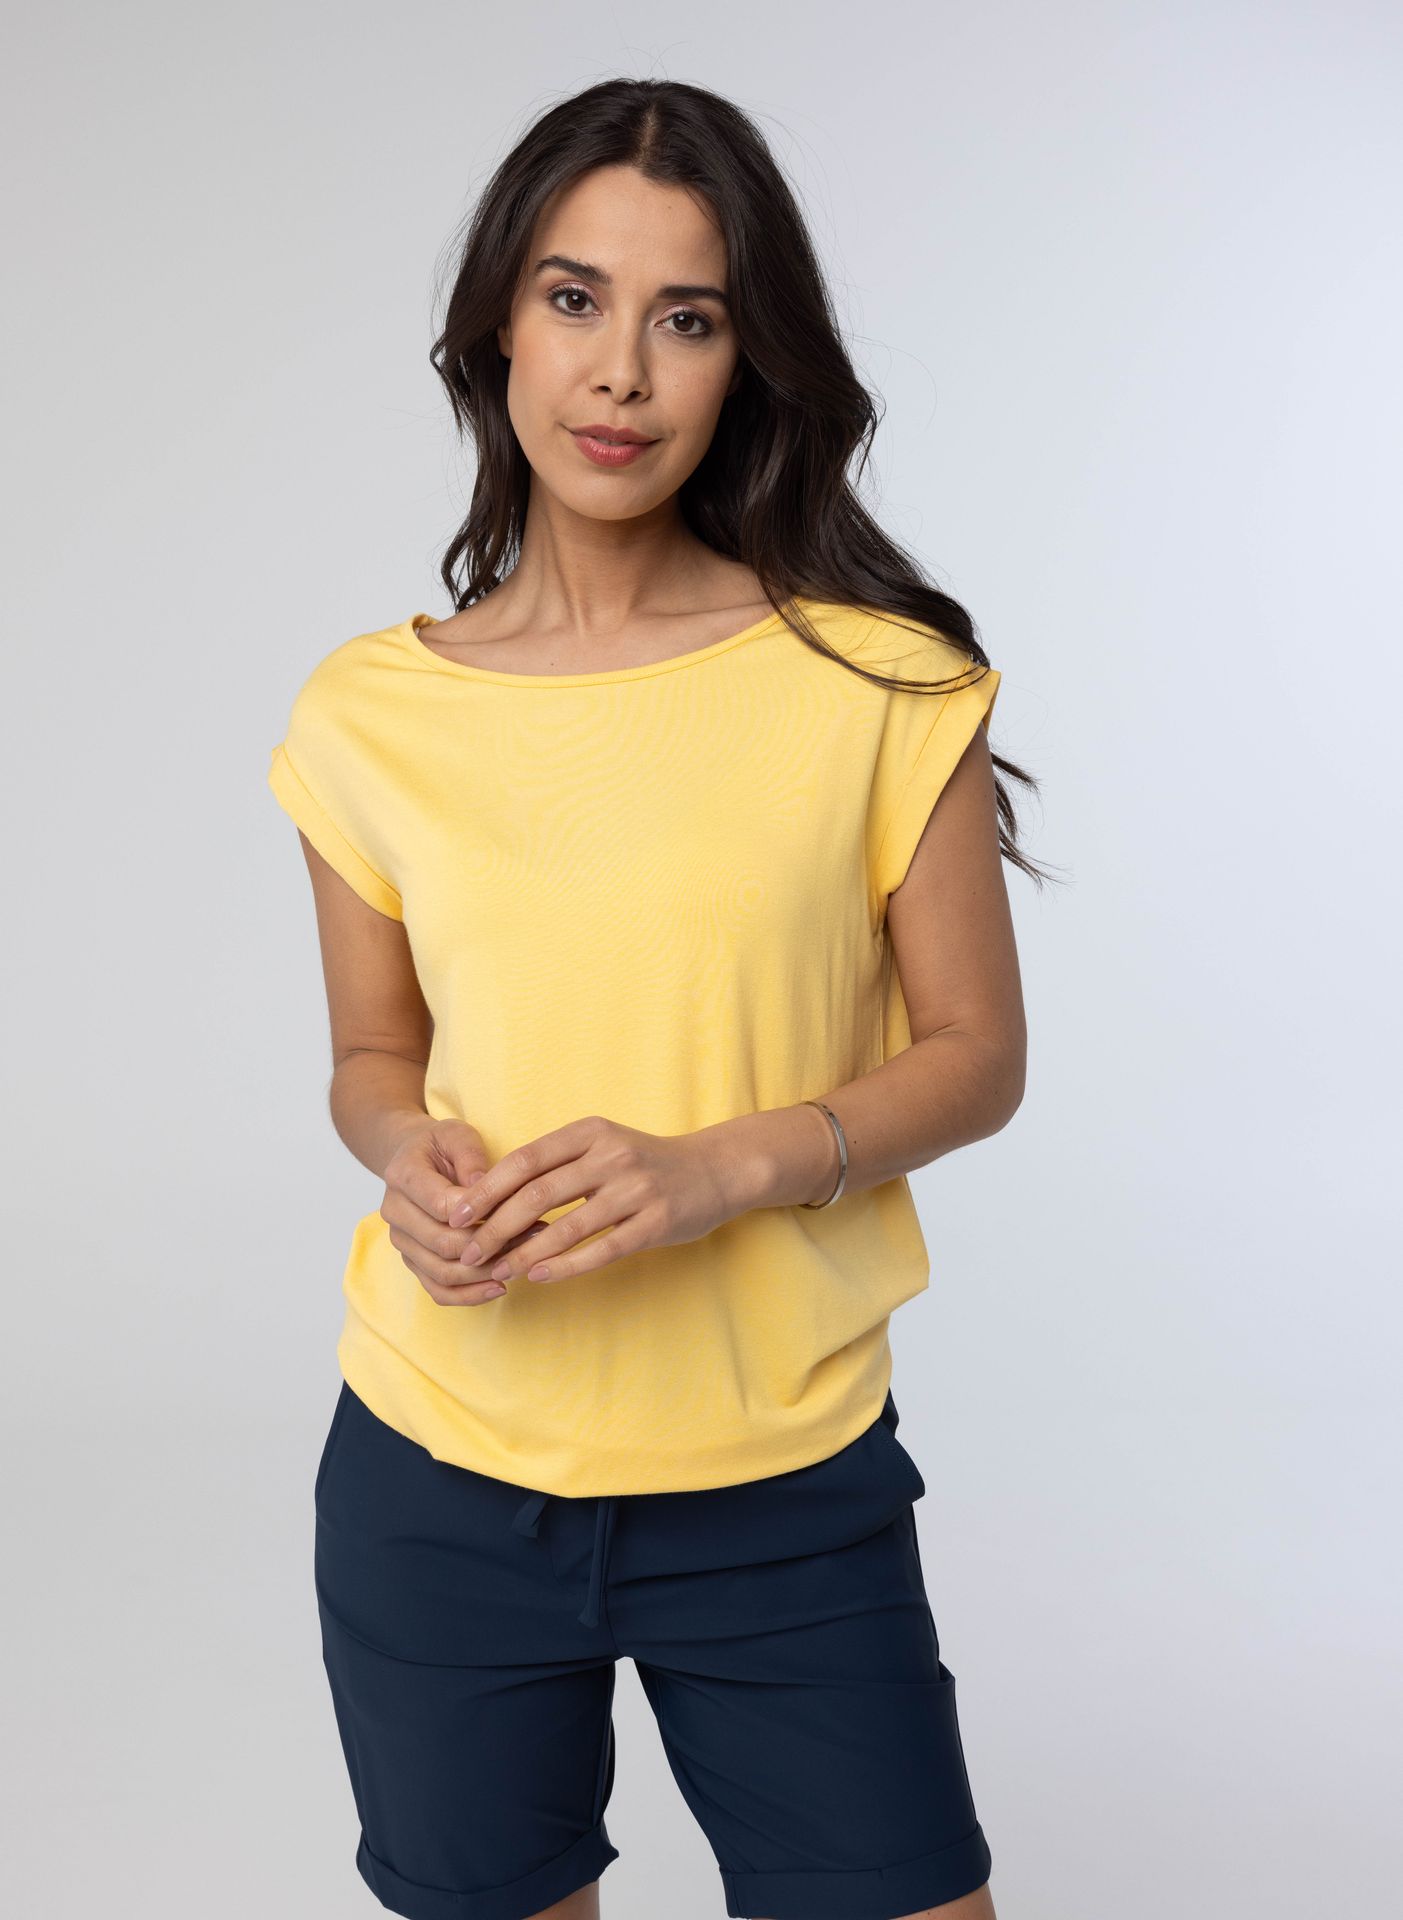 Norah Shirt Marije geel yellow 203656-300